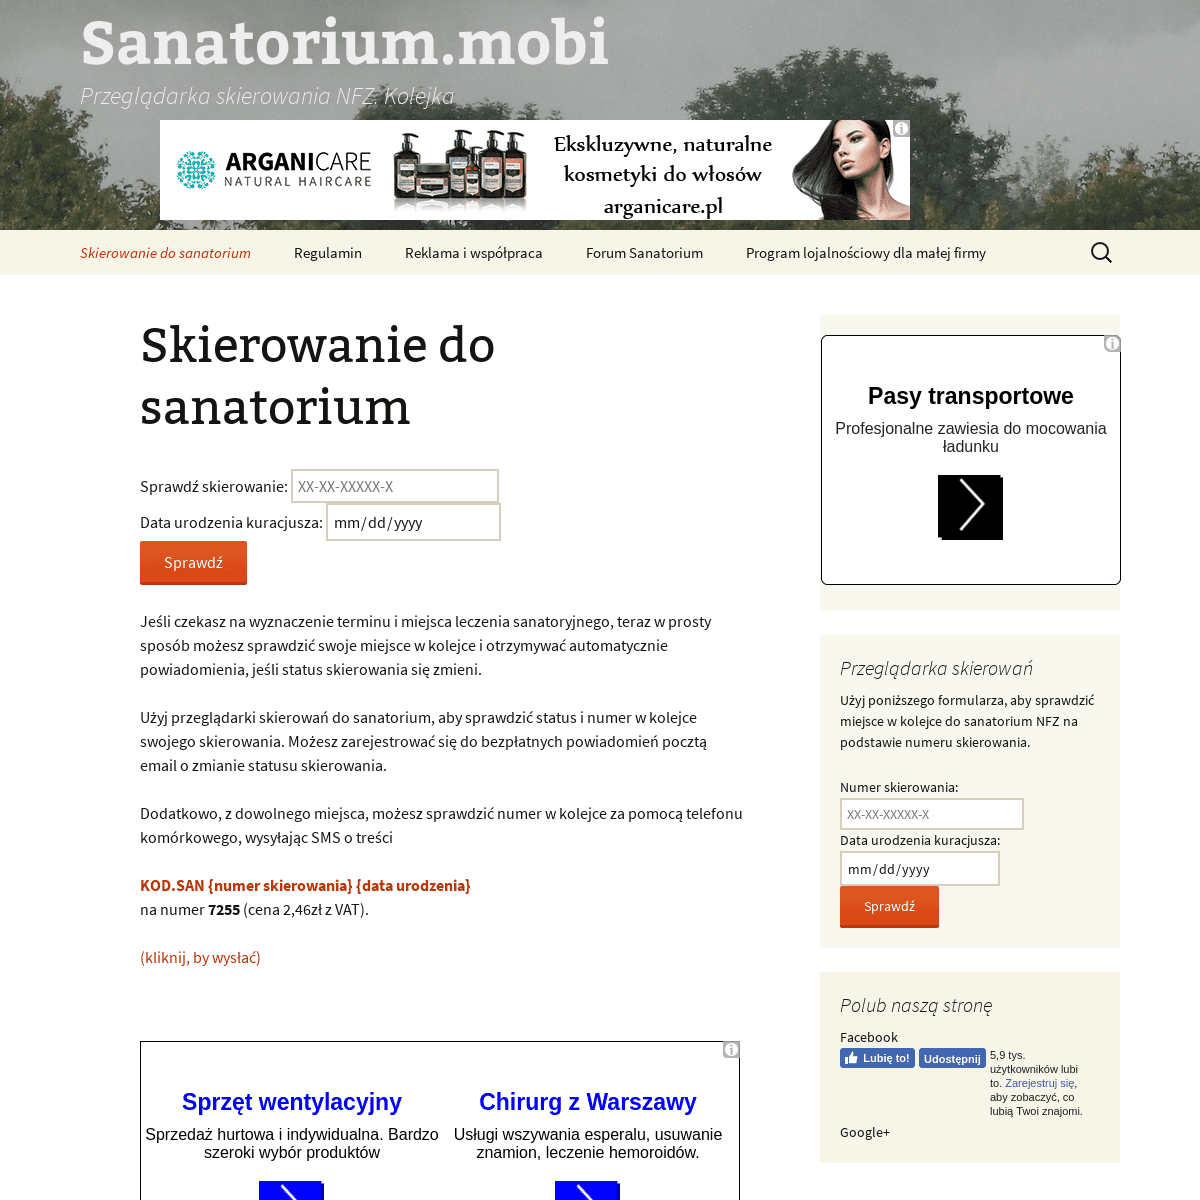 A complete backup of sanatorium.mobi